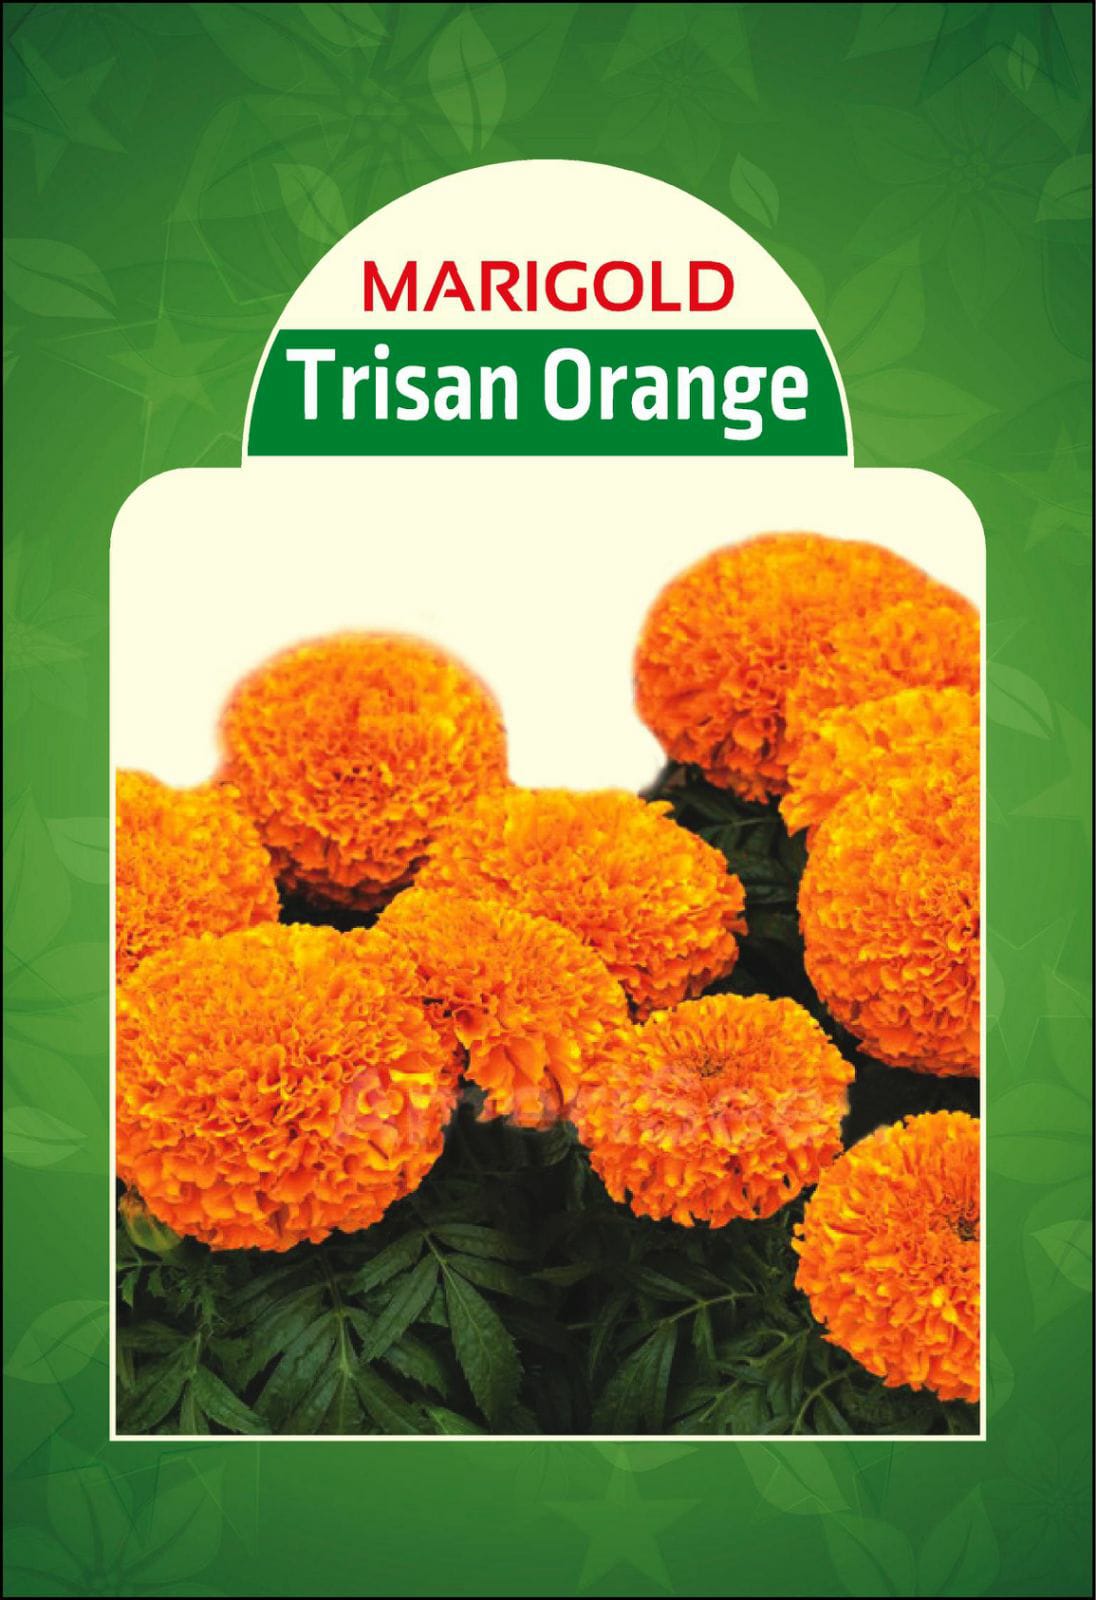 Marigold Trisan Orange